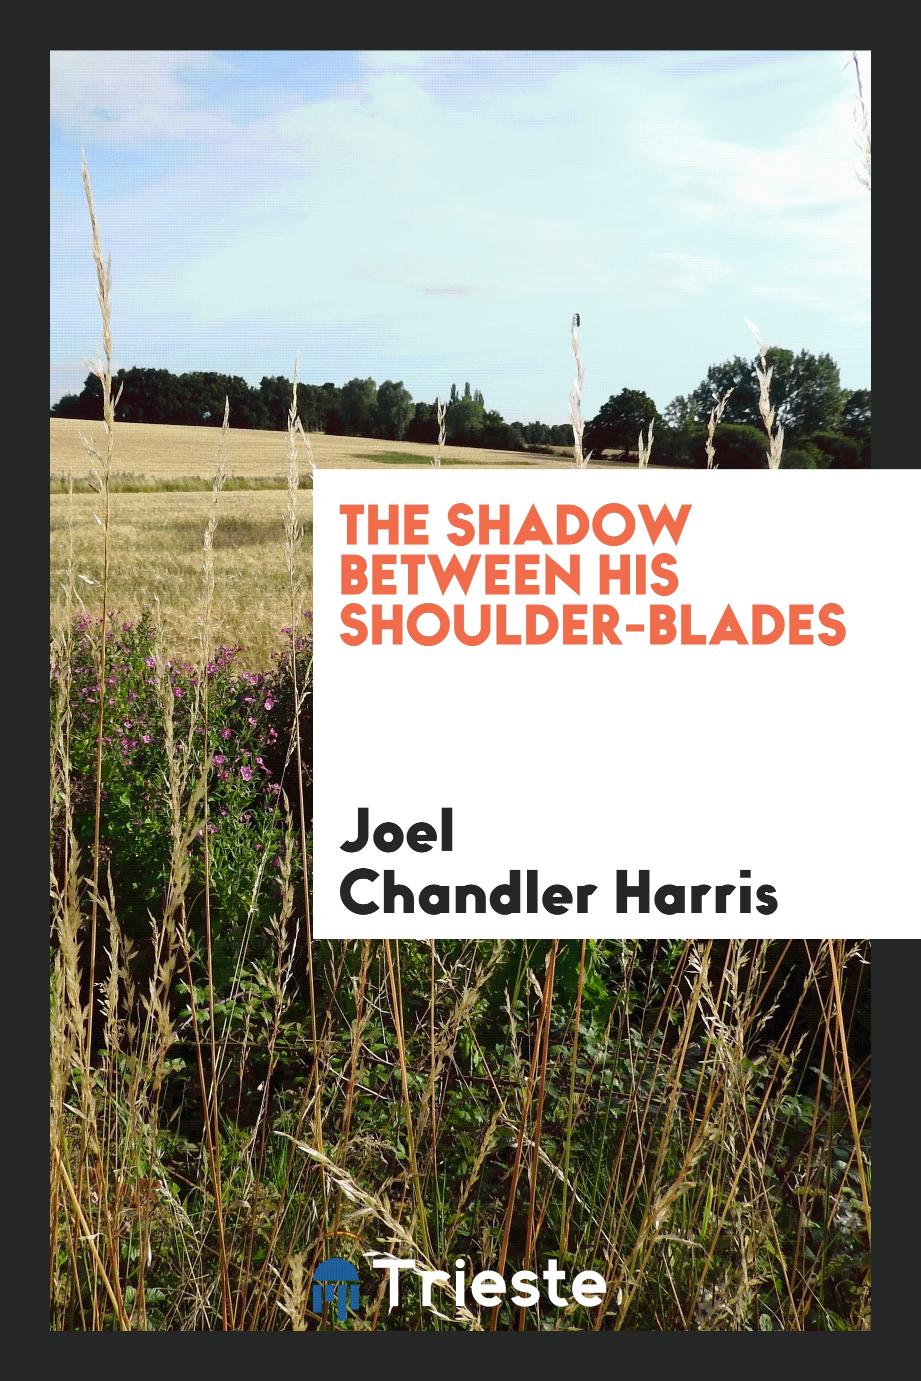 The shadow between his shoulder-blades